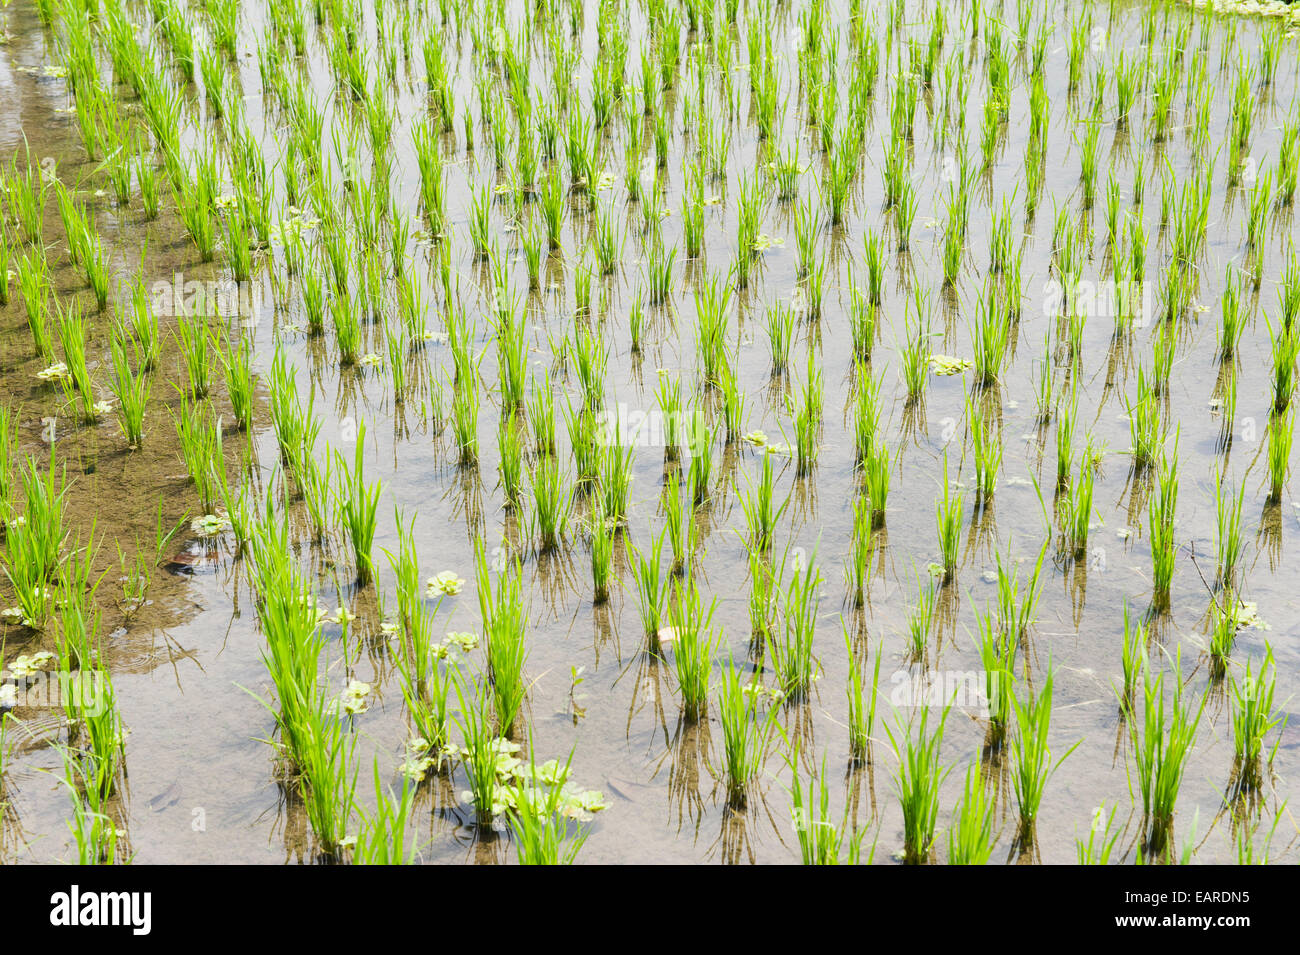 Rice plants in a rice paddy, Tirtagangga, Bali, Indonesia Stock Photo